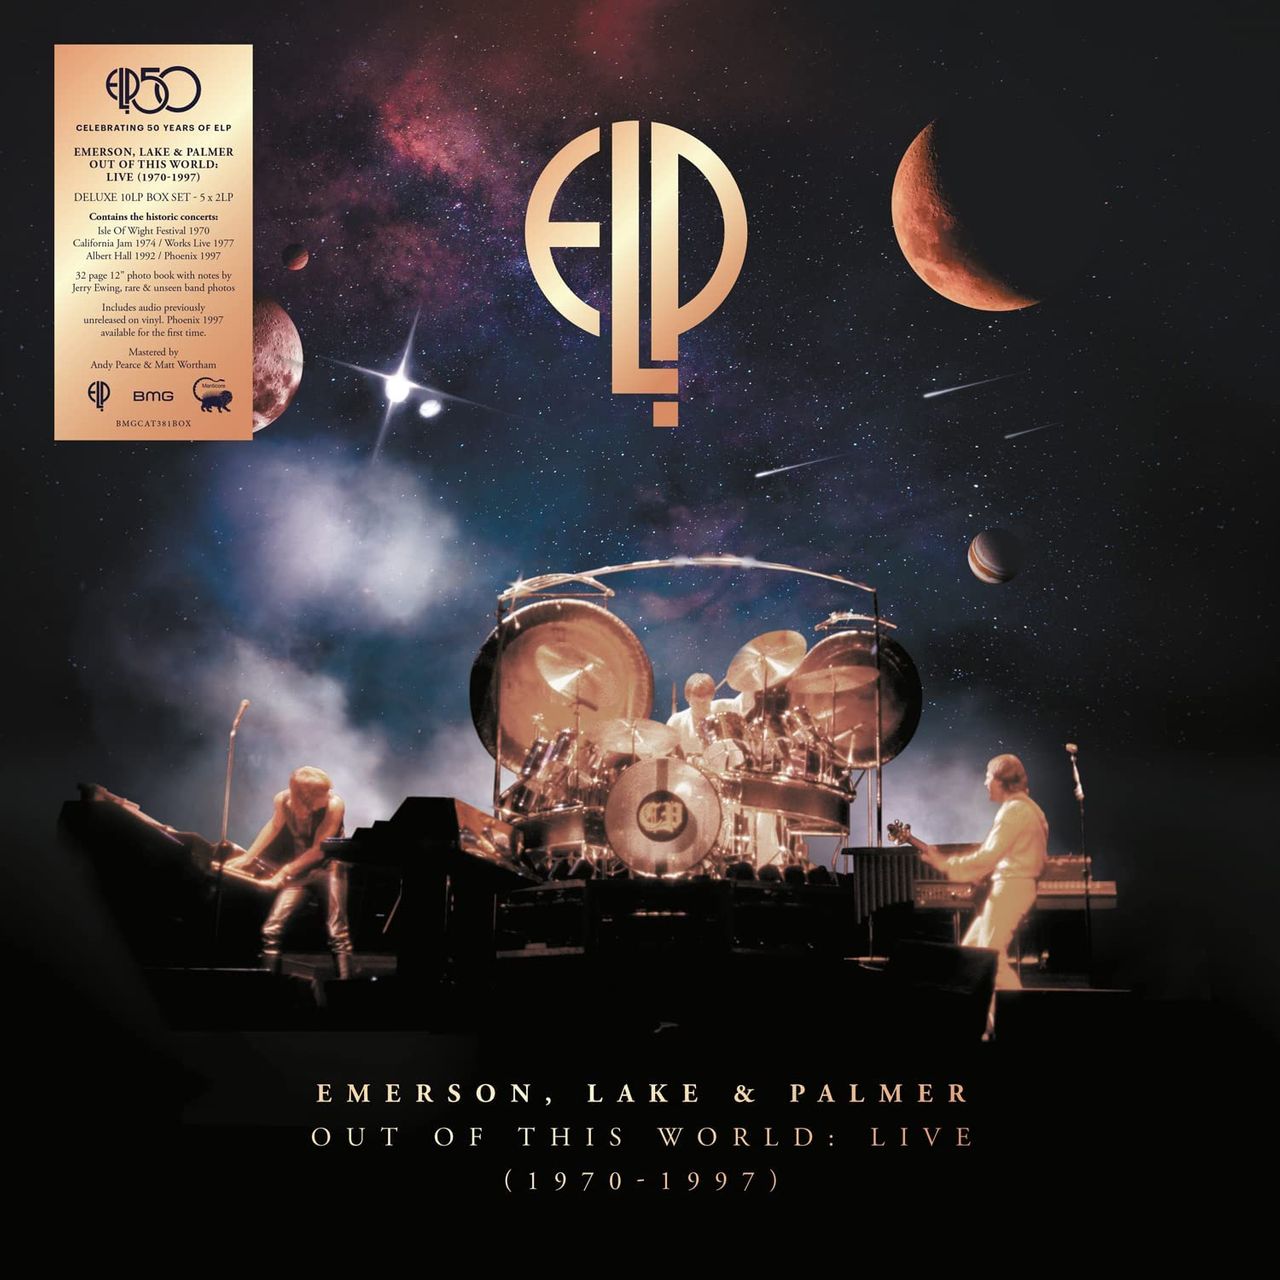 Emerson Lake & Palmer Out Of This World: Live 1970-1997 - Deluxe 10LP Box Set - Sealed UK Vinyl Box Set BMGCAT381BOX